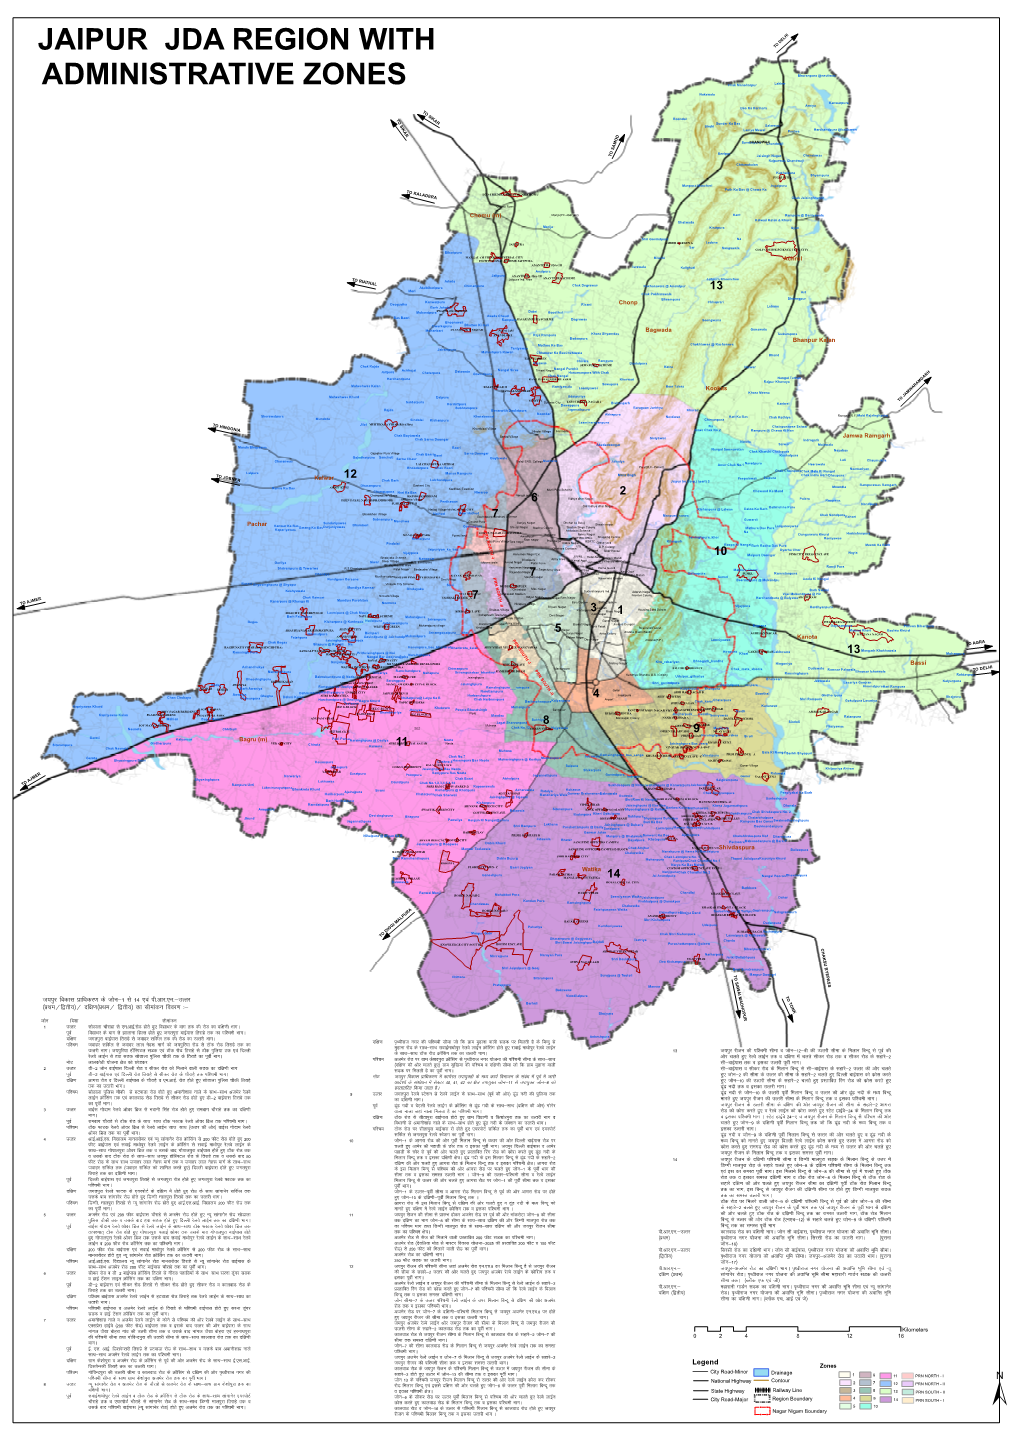 Jaipur Jda Region with Administrative Zones